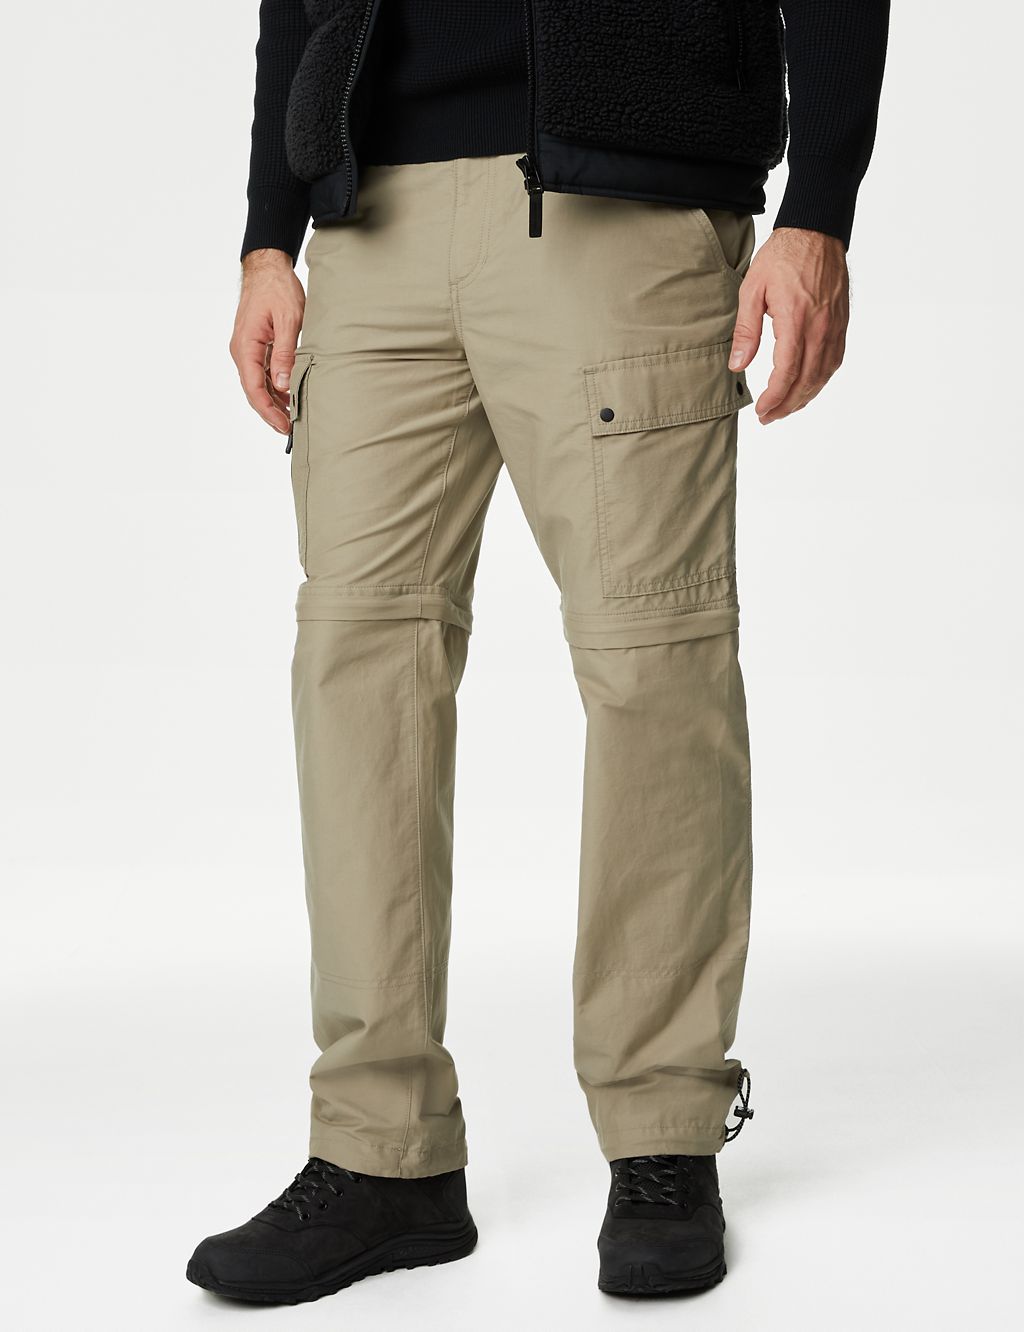 Zip Off Trekking Trousers with Stormwear™ 3 of 7